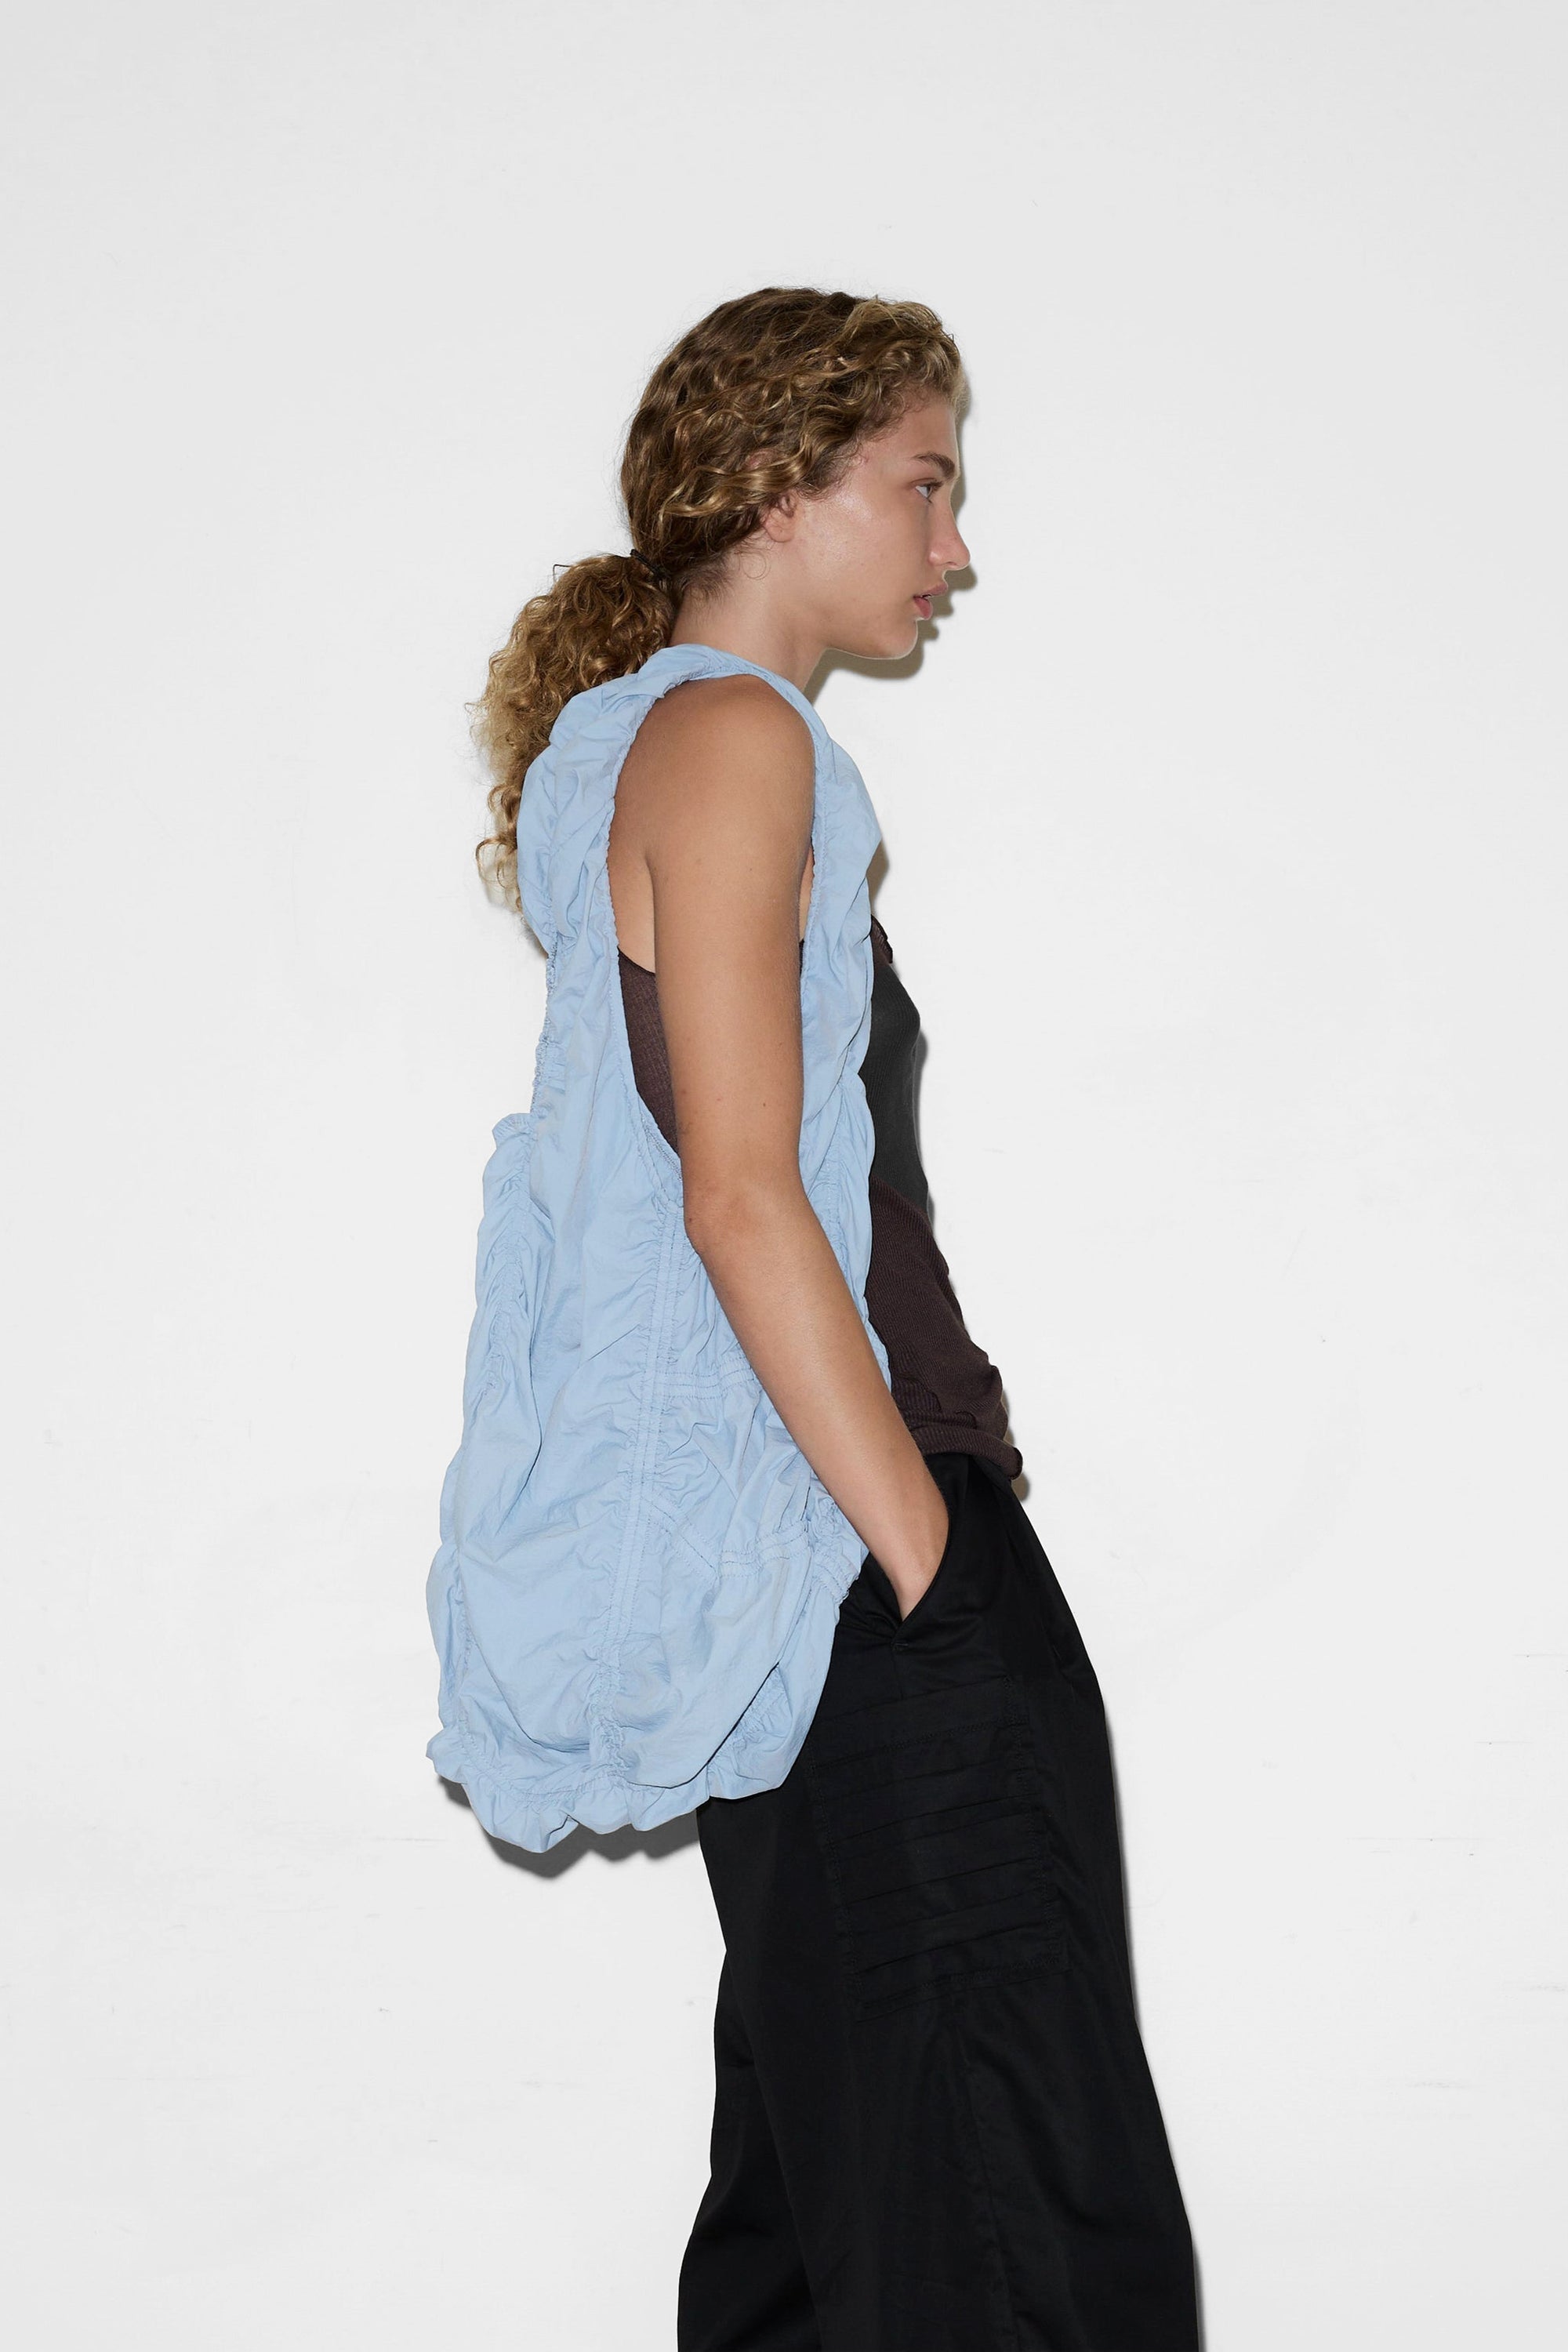 Parachute Bag in Baby Blue by Deiji Studios